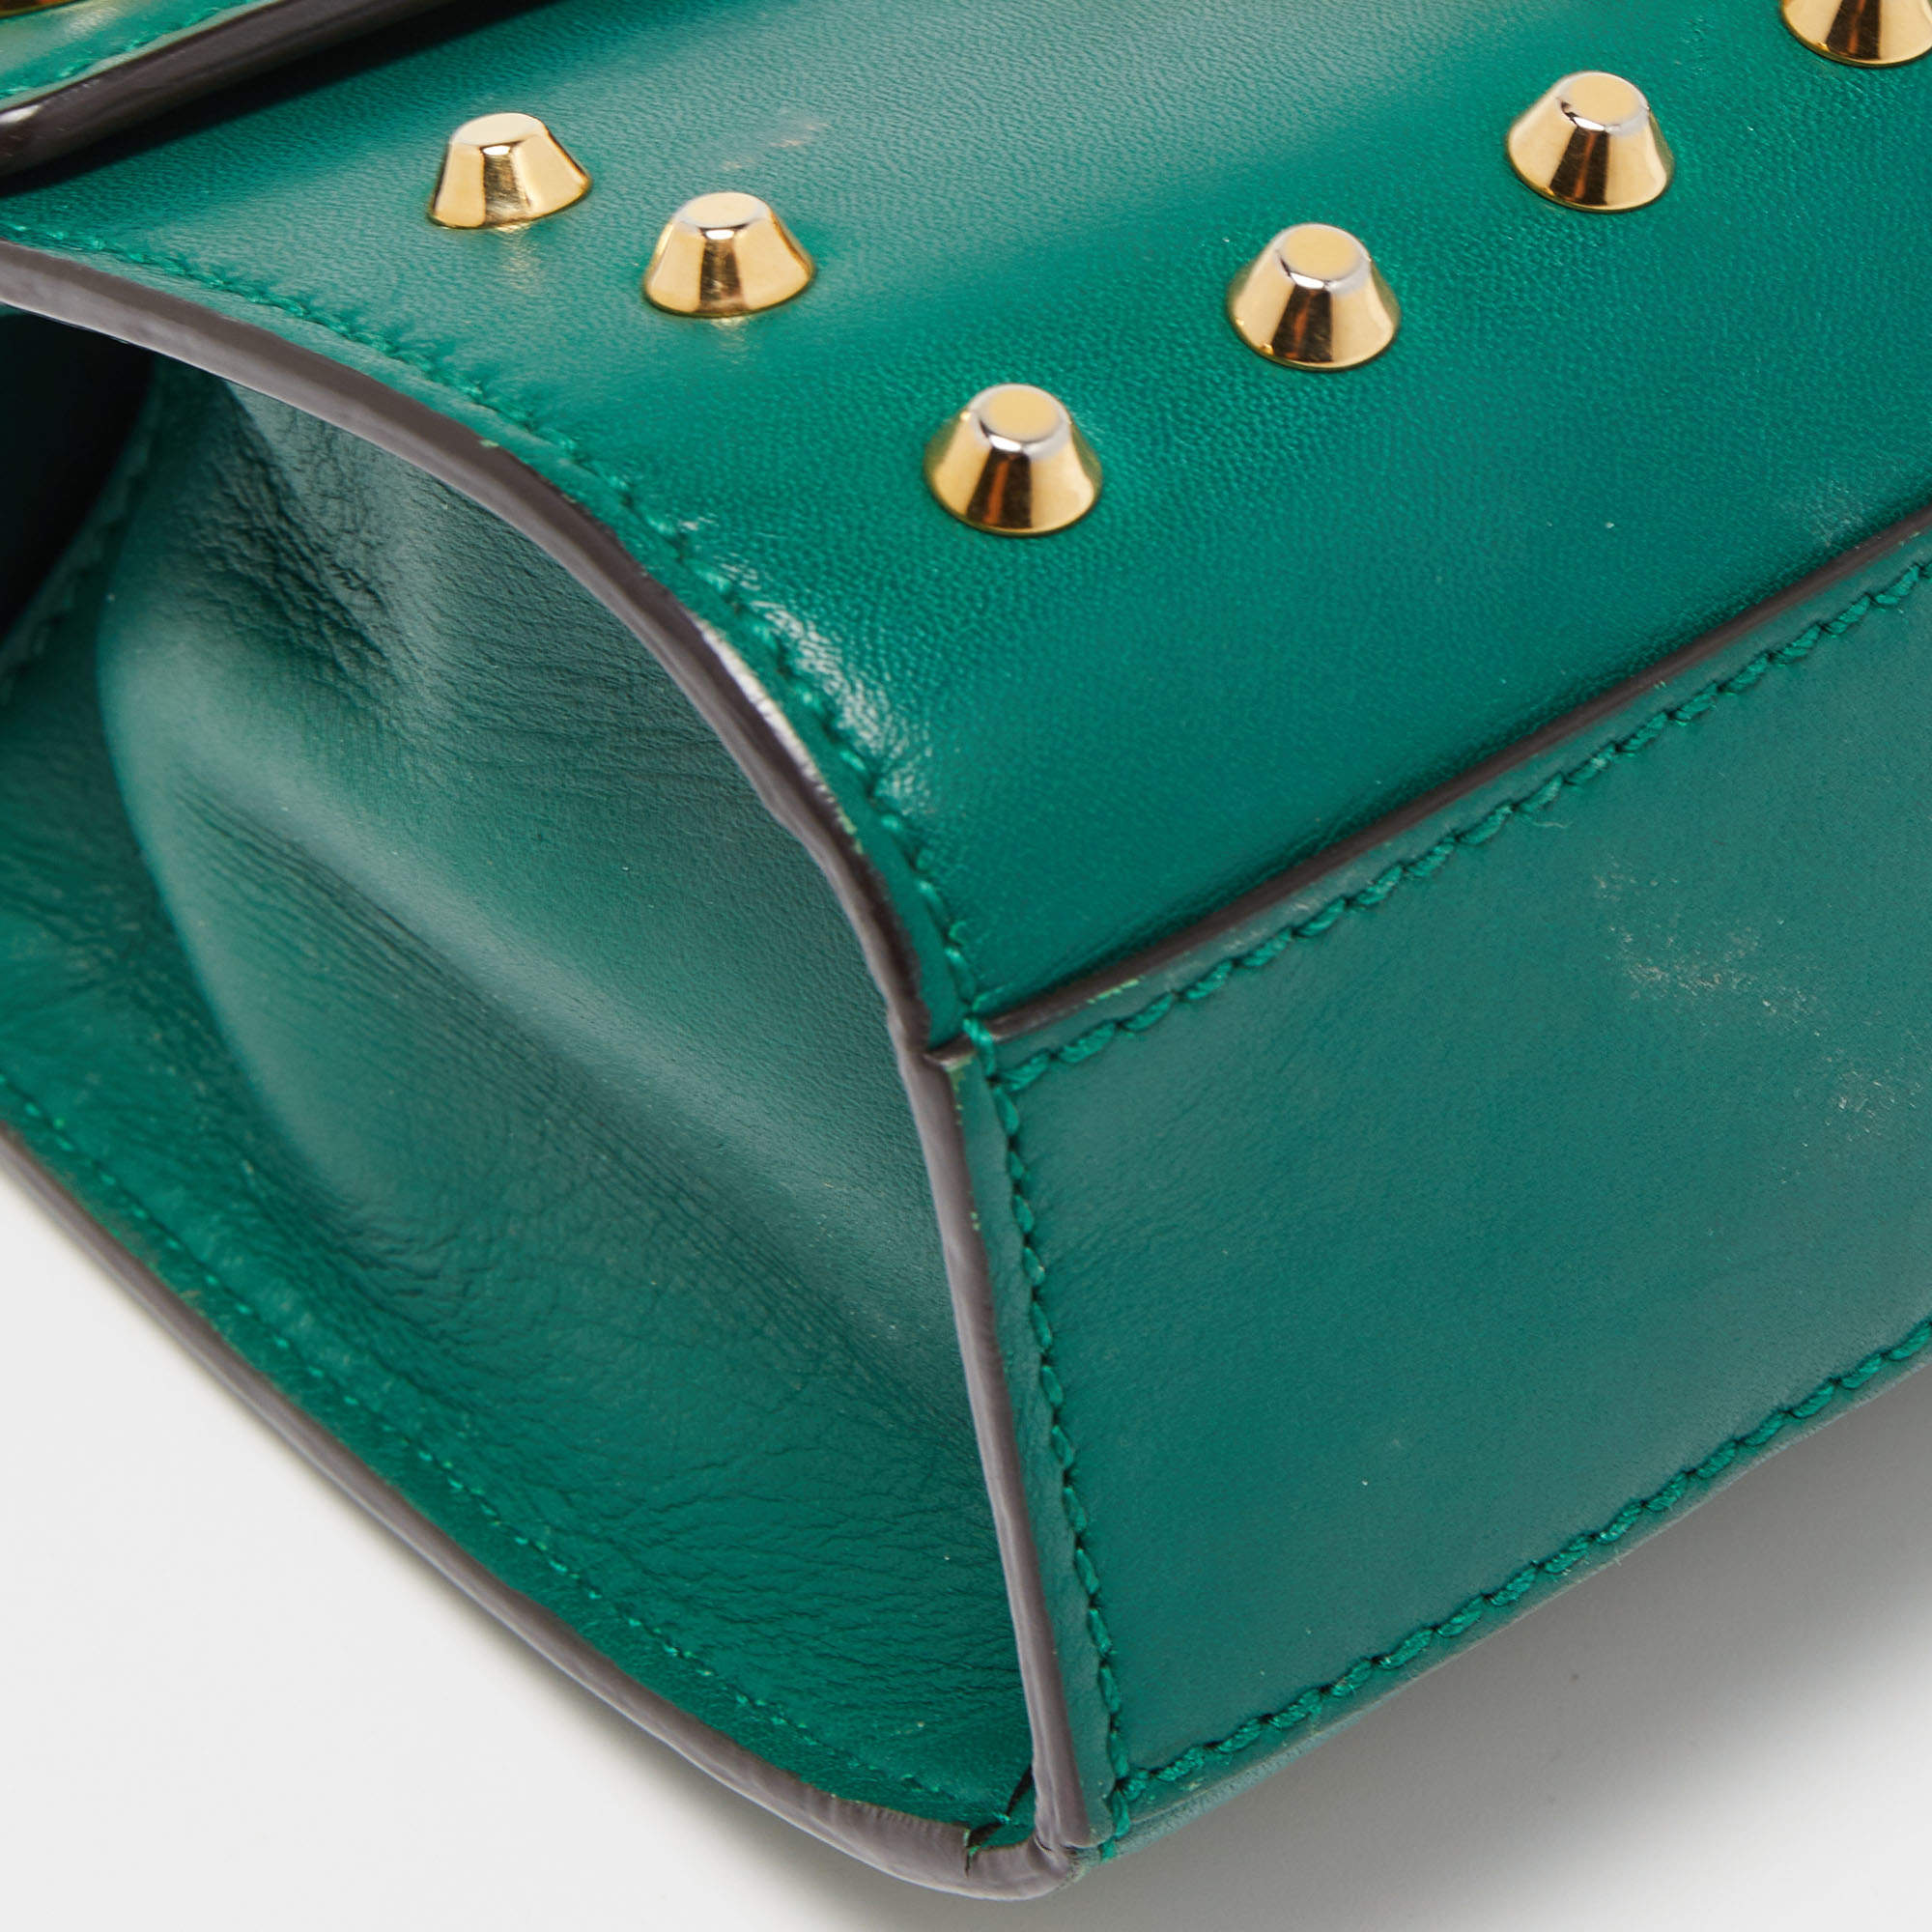 Green Leather Studded Padlock Shoulder Bag Small